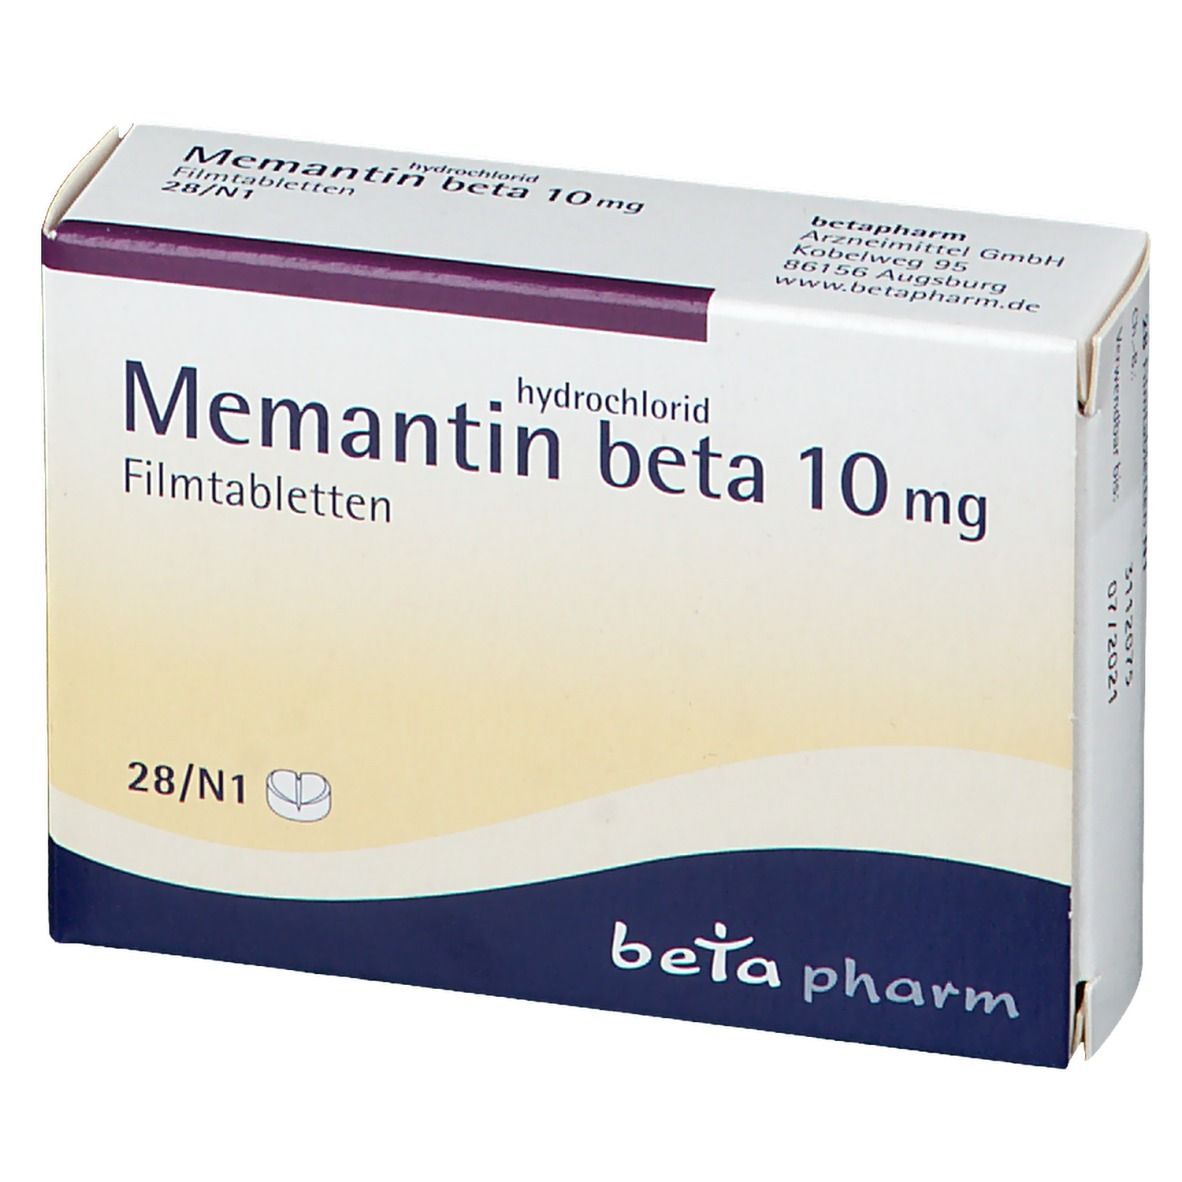 Memantinhydrochlorid beta 10 mg